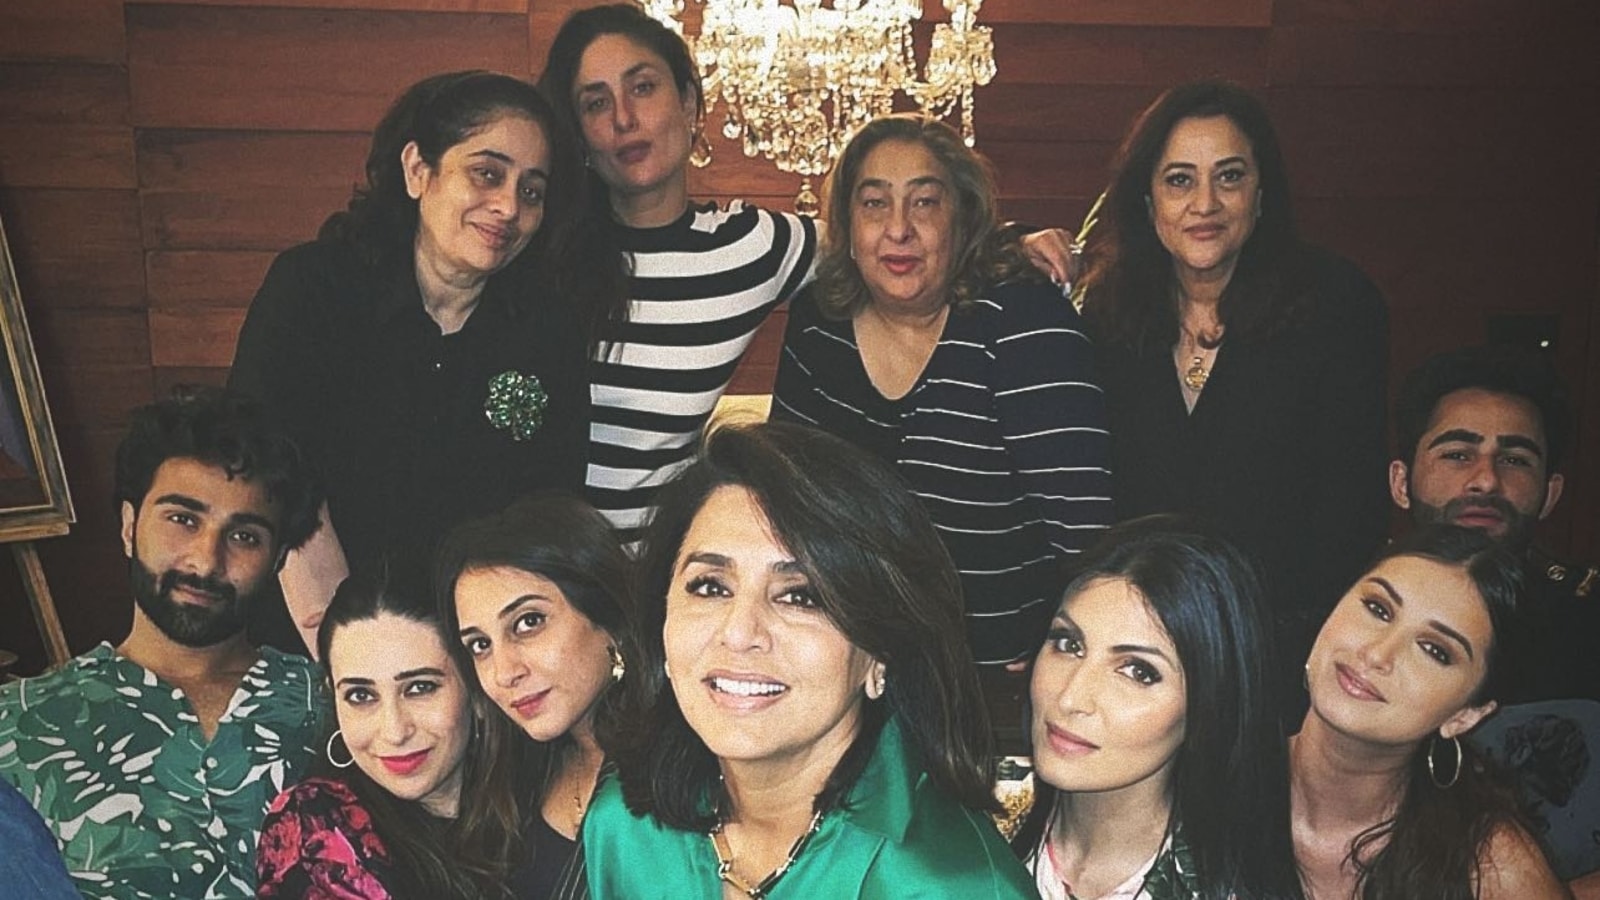 Kareena Kapoor poses with Karisma Kapoor, Neetu Kapoor, Tara Sutaria in fresh family photos from get together